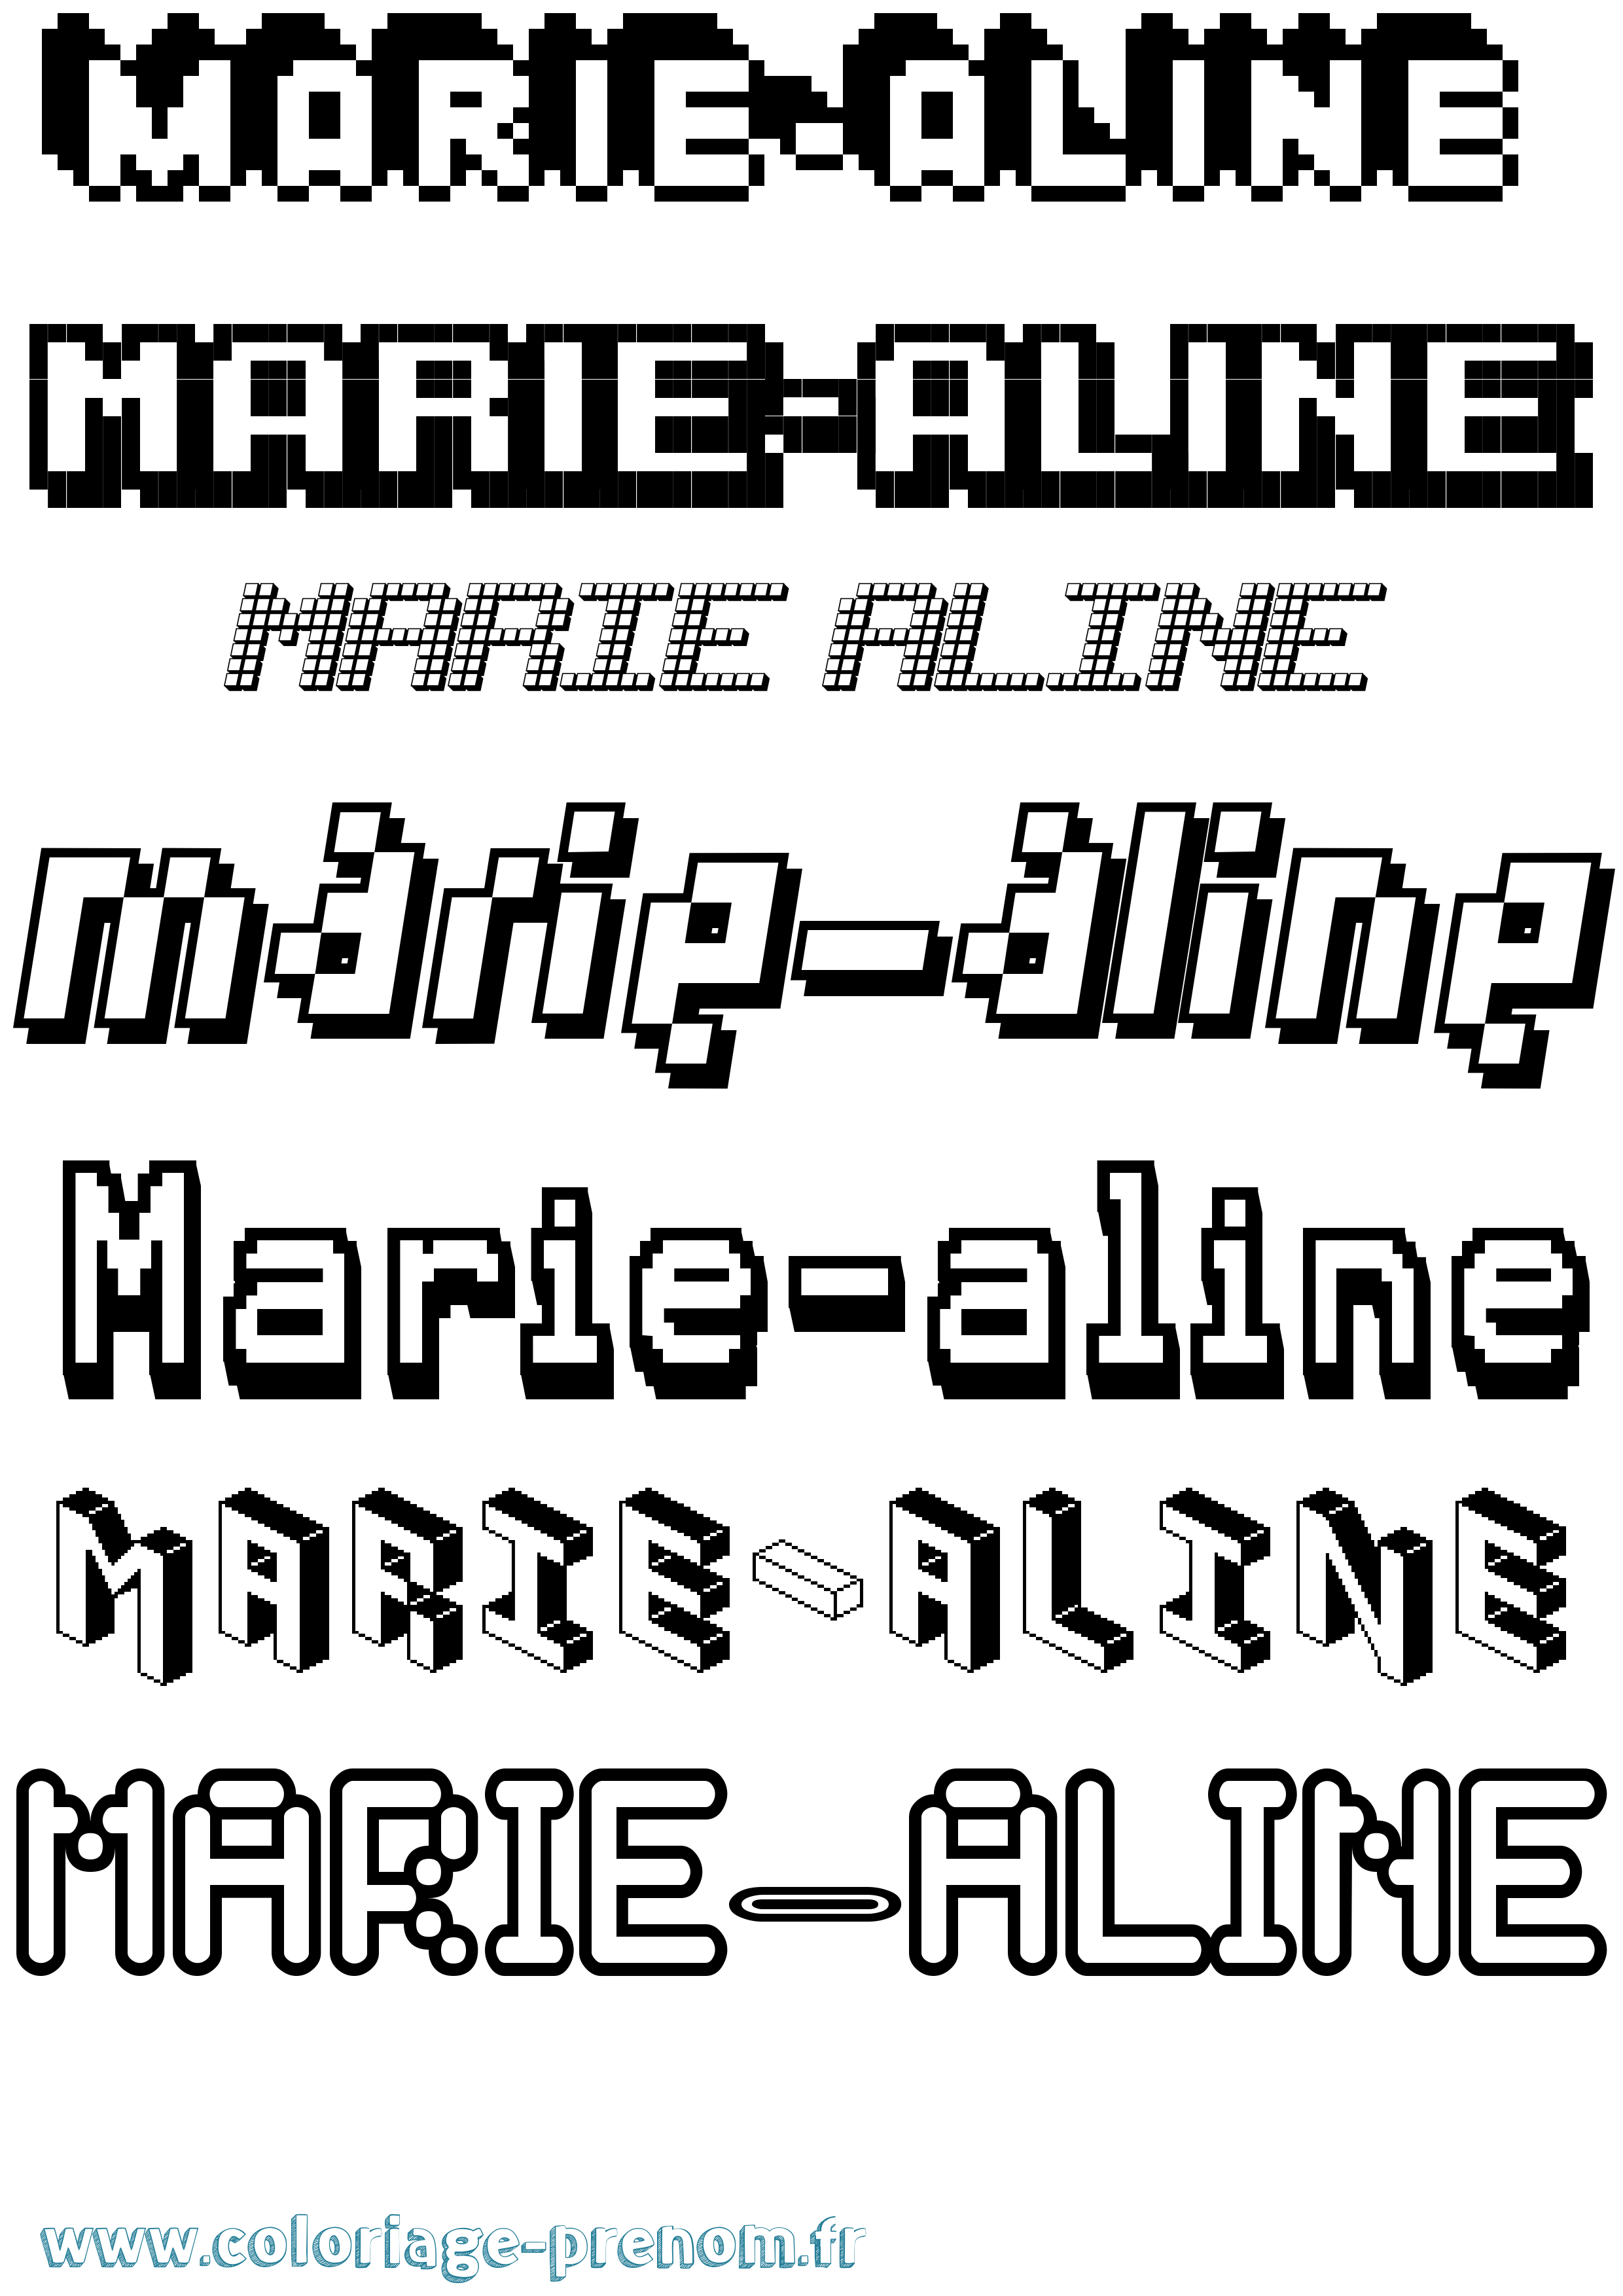 Coloriage prénom Marie-Aline Pixel